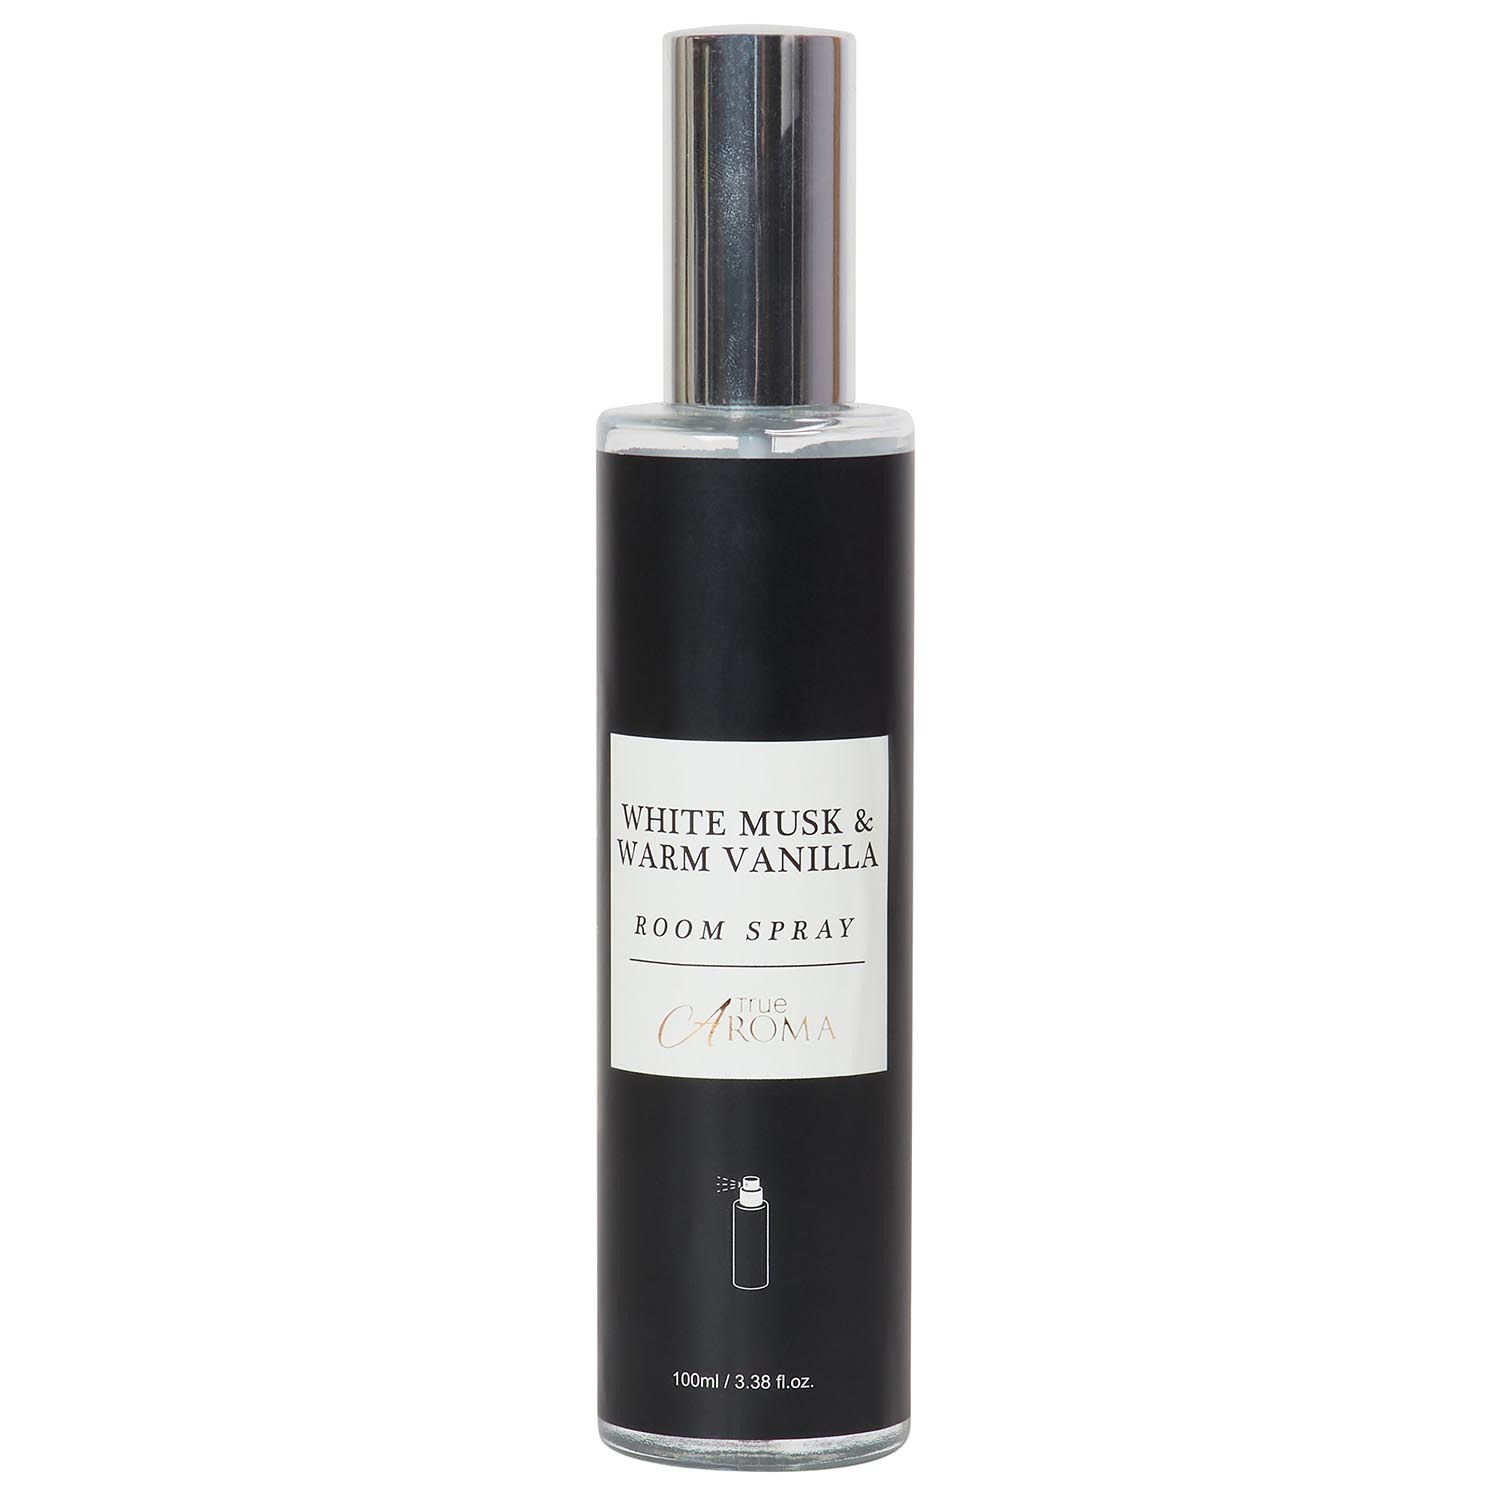 White Musk & Warm Vanilla Room Spray 100ml - Black Image 1